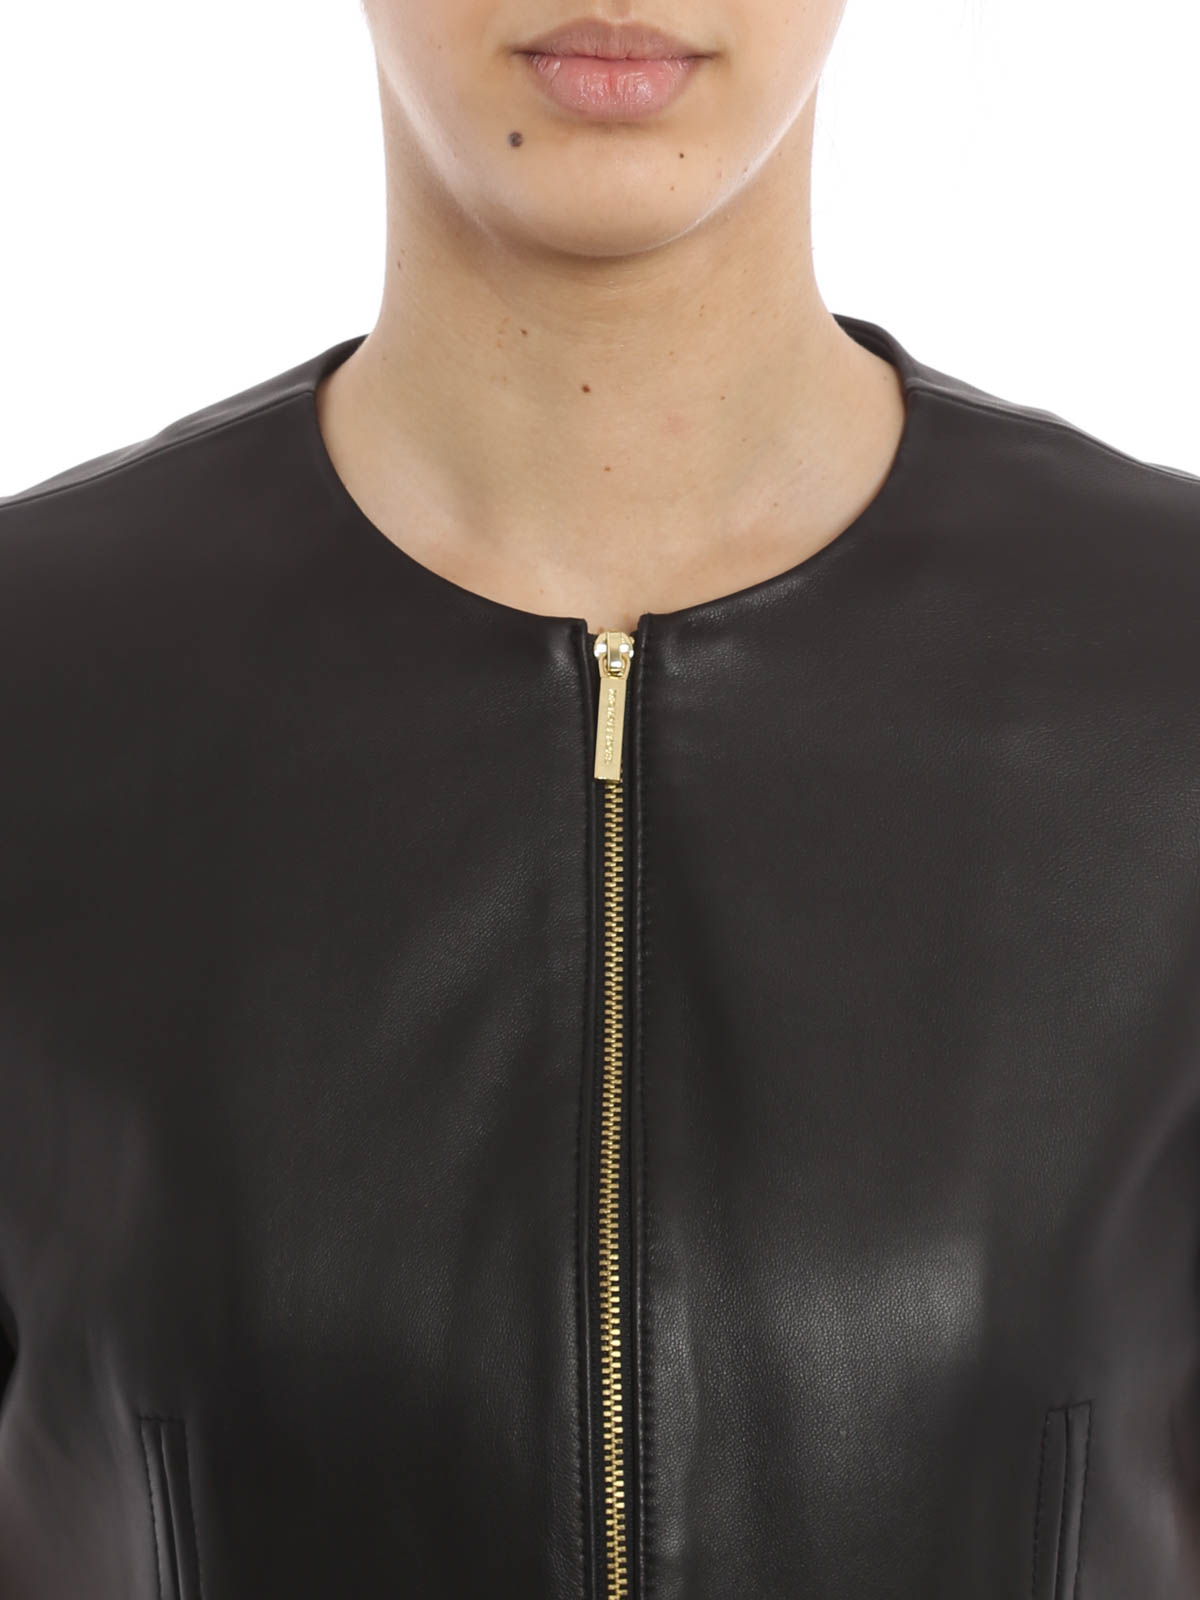 Leather jacket Michael Kors - Multi zip leather jacket - MS62HG512F001